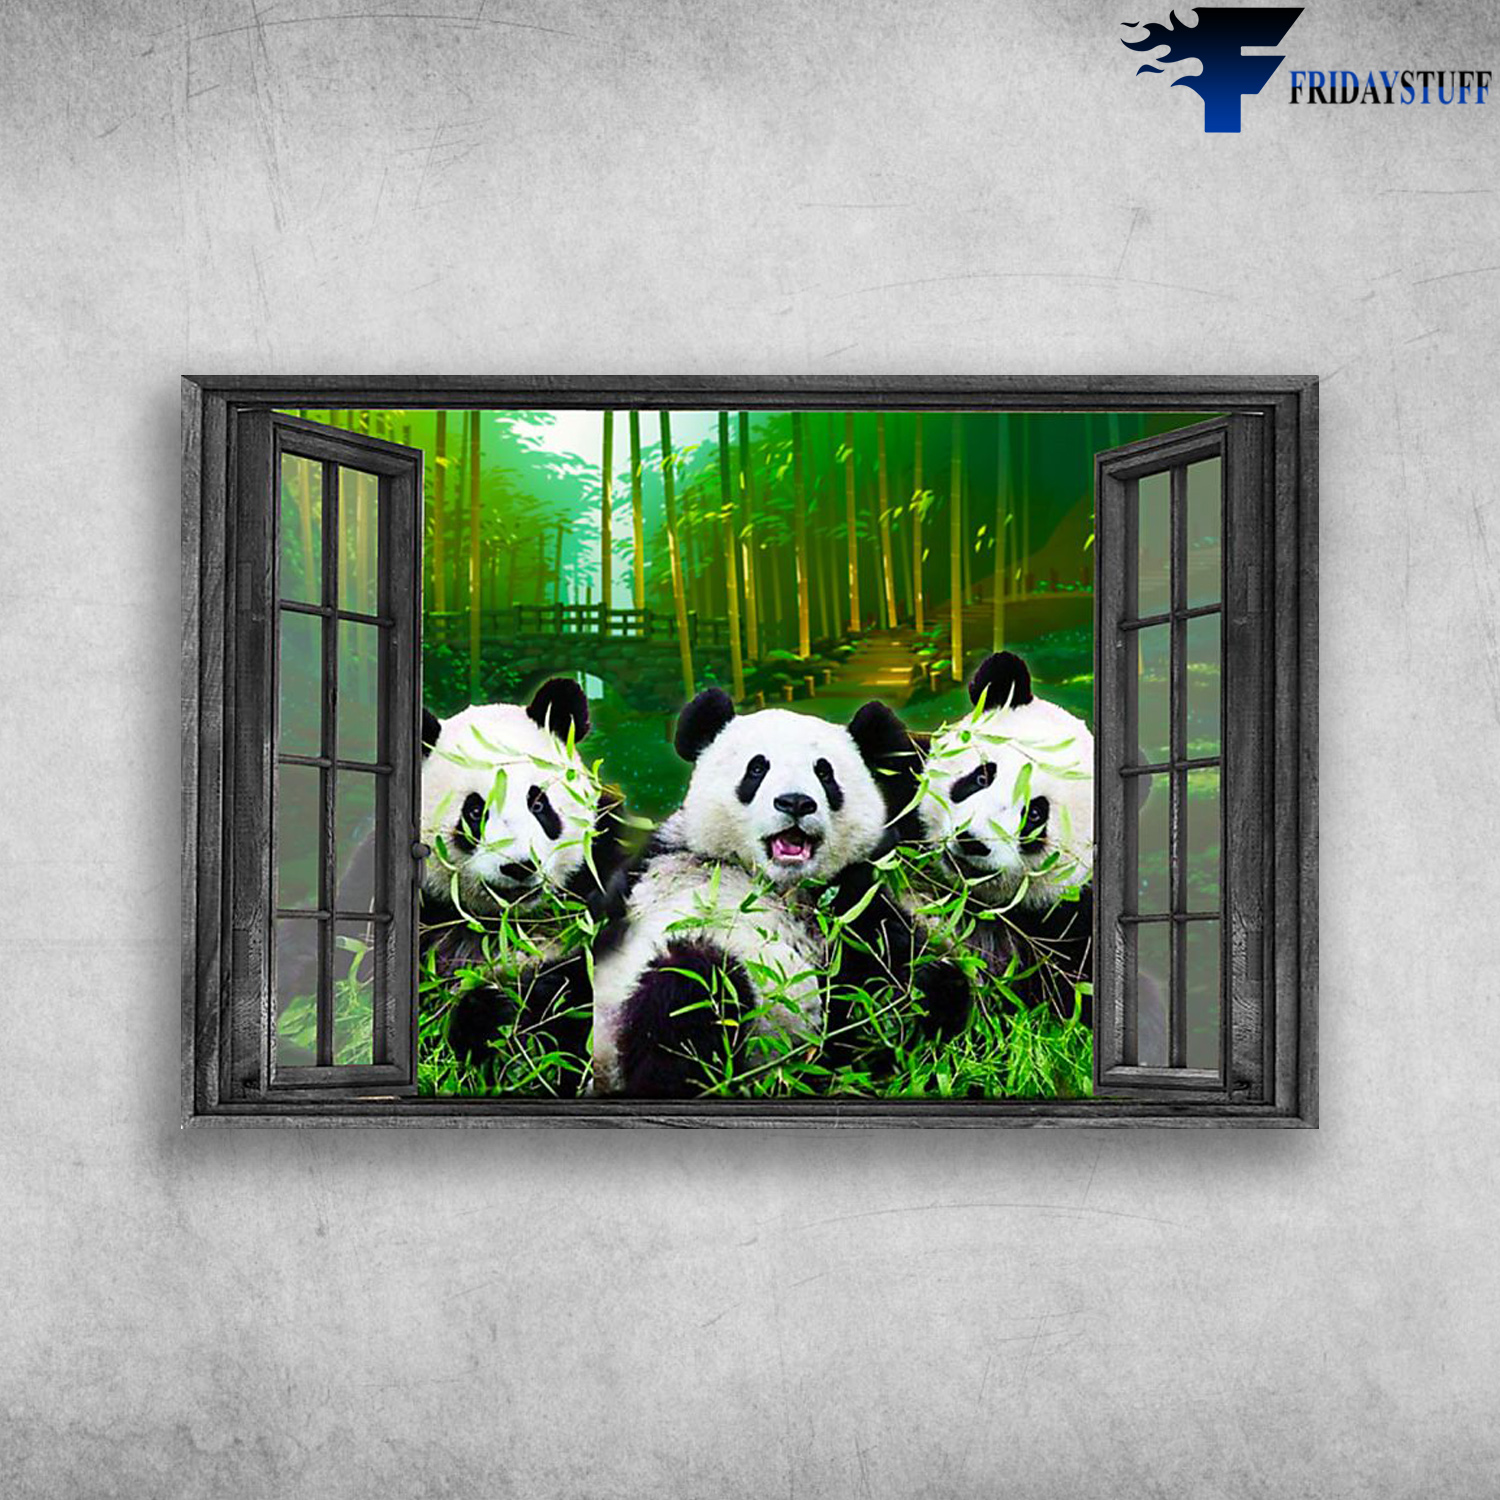 The Panda Outside The Window